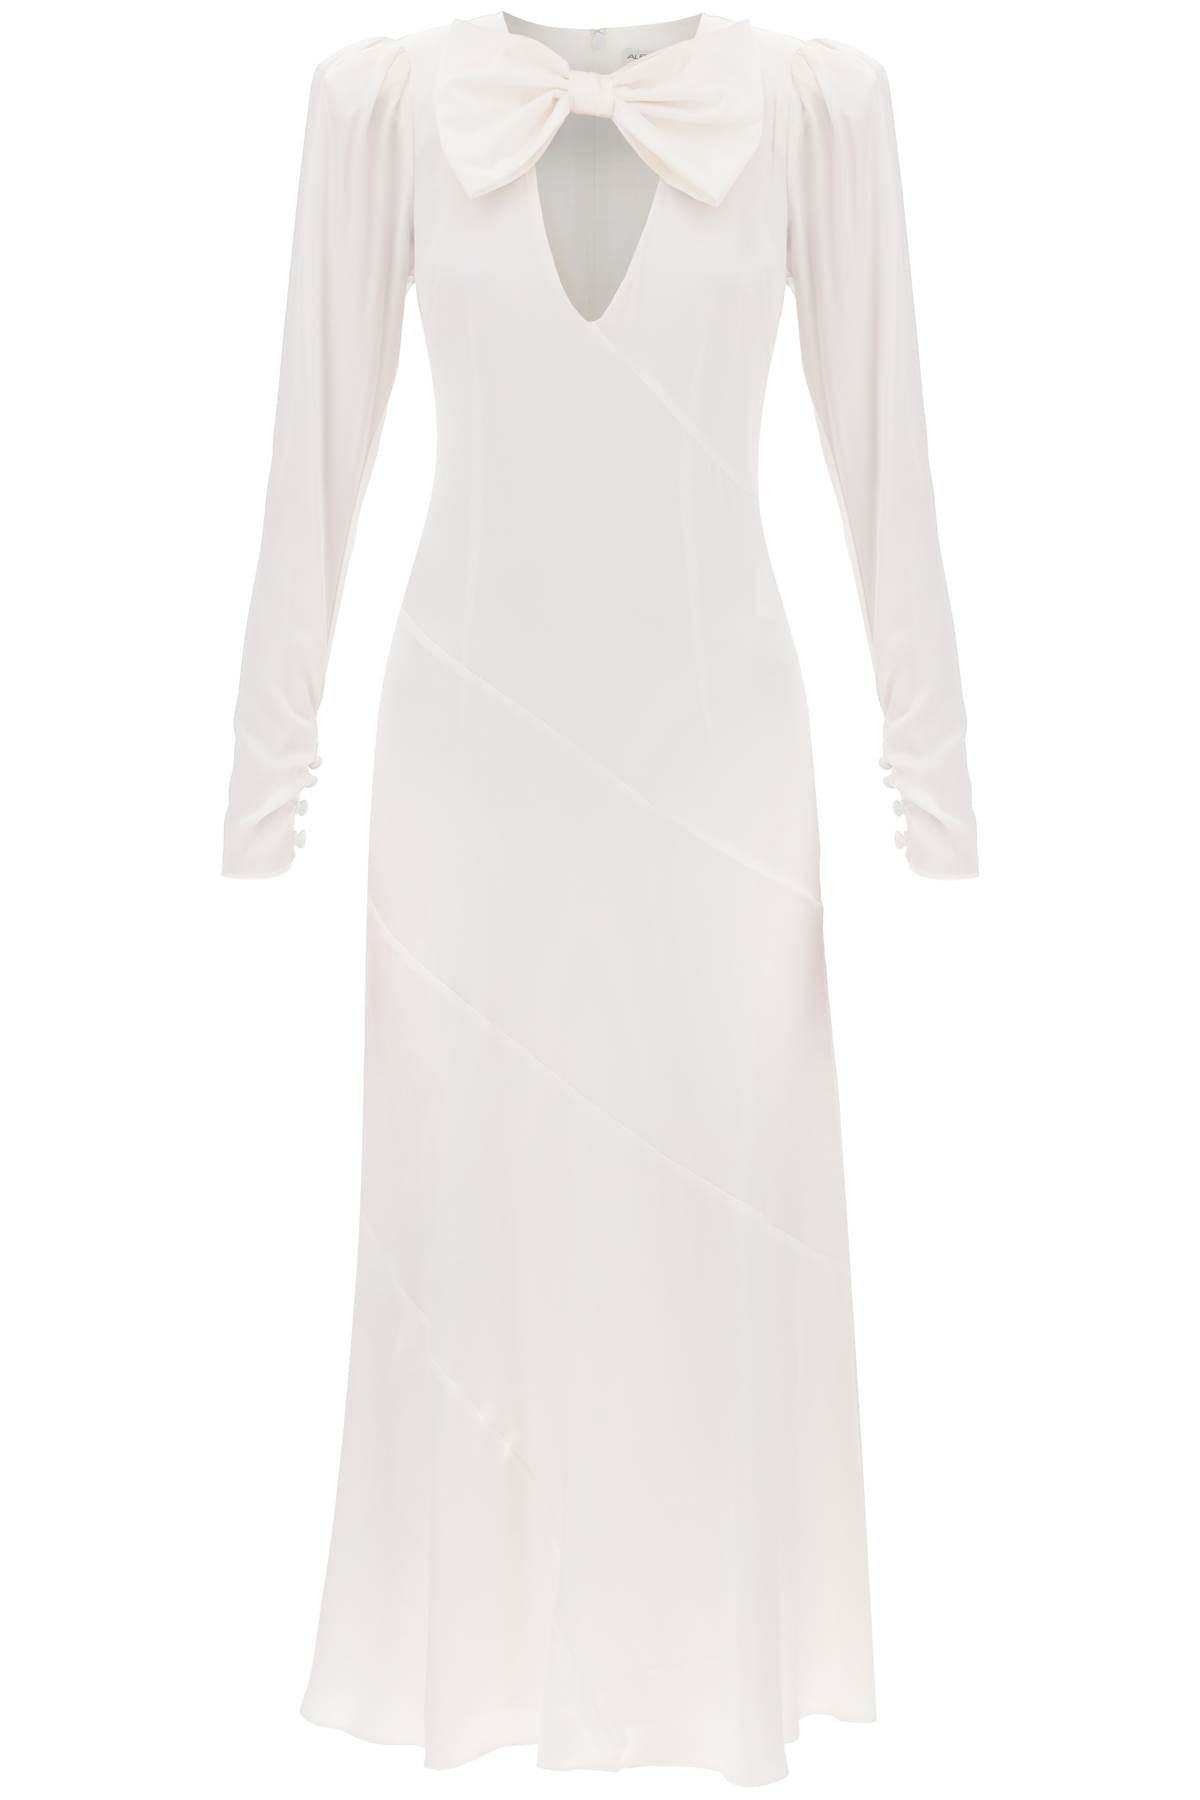 Alessandra rich long dress in silk satin FAB3432 F2569 WHITE